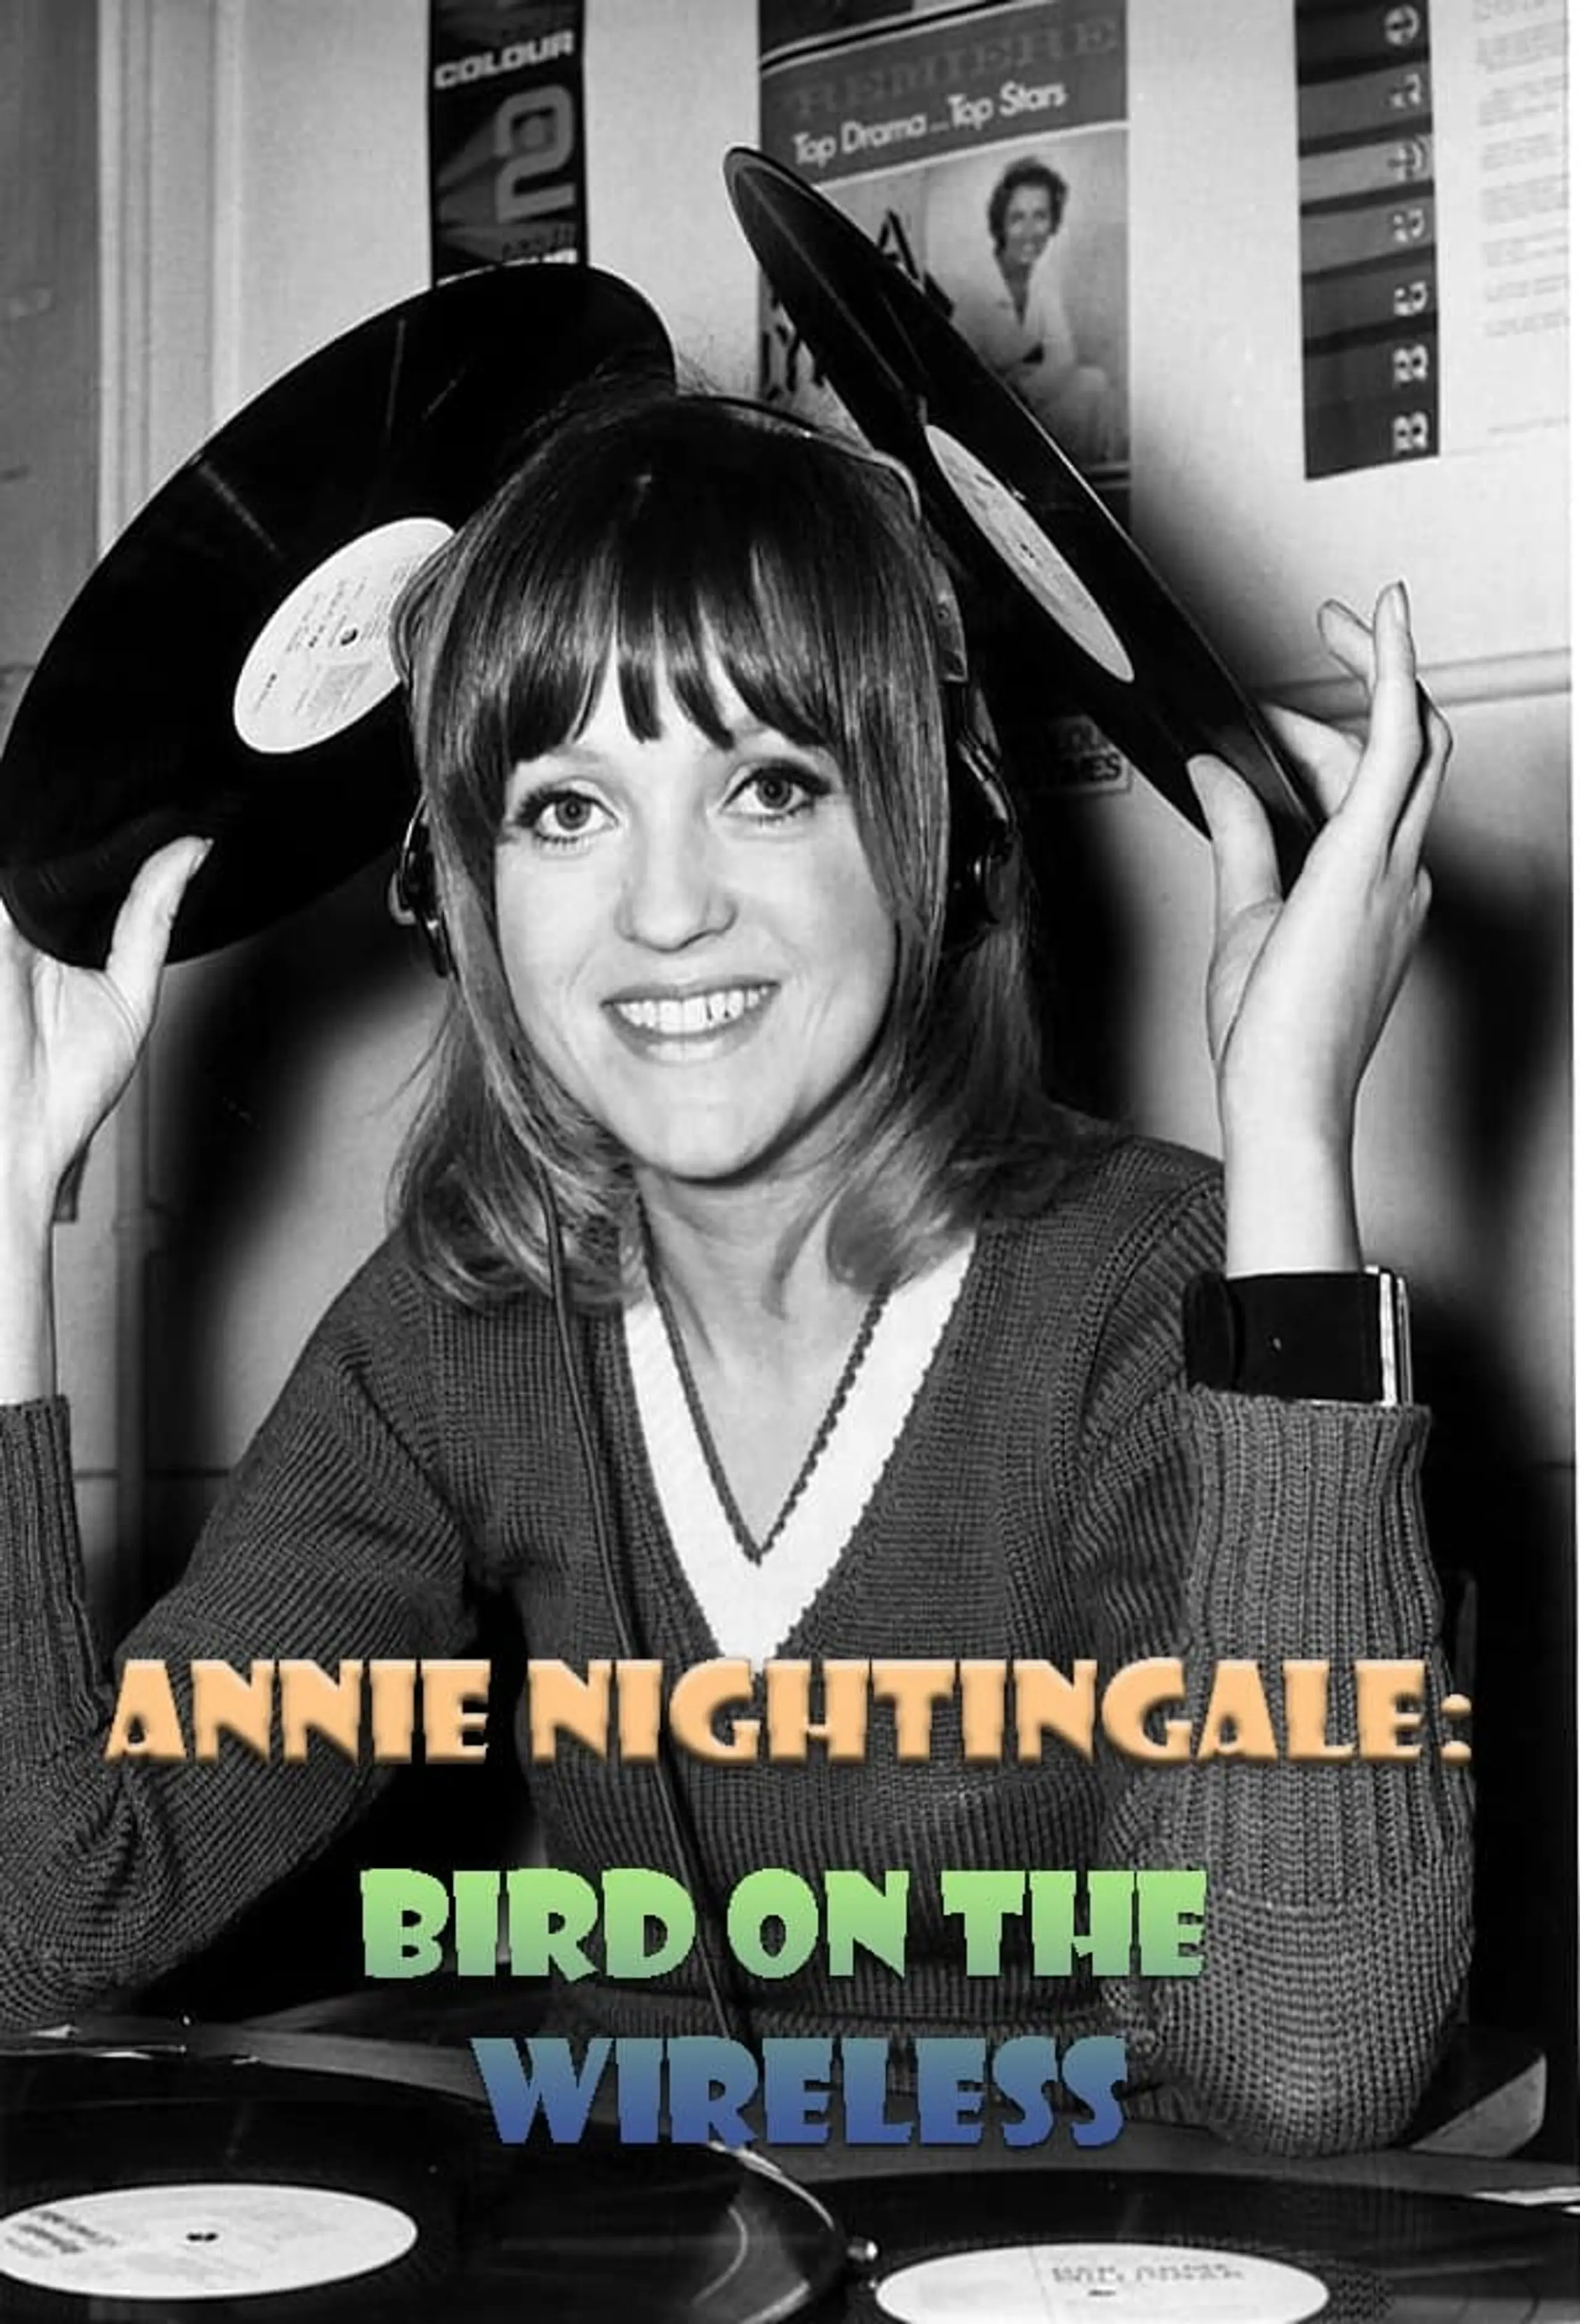 Annie Nightingale: Bird on the Wireless